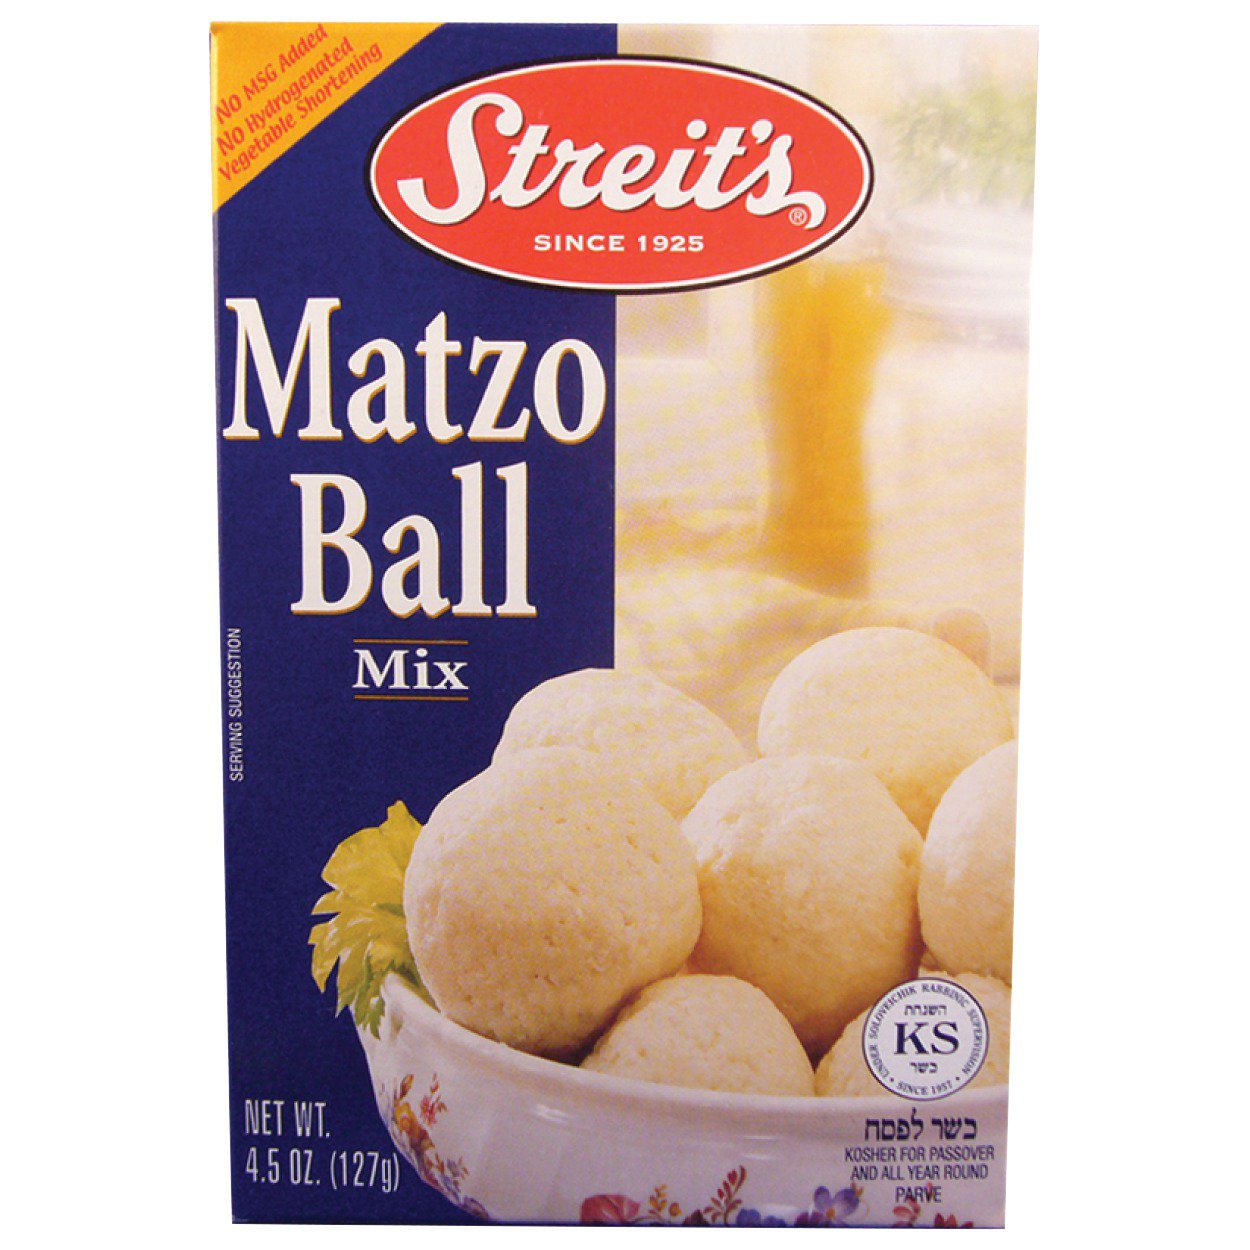 Mixing balls. Matzo Ball. White Matzo meal. Dr. Oetker купить мусс. Манишевиц посовер Матсос.